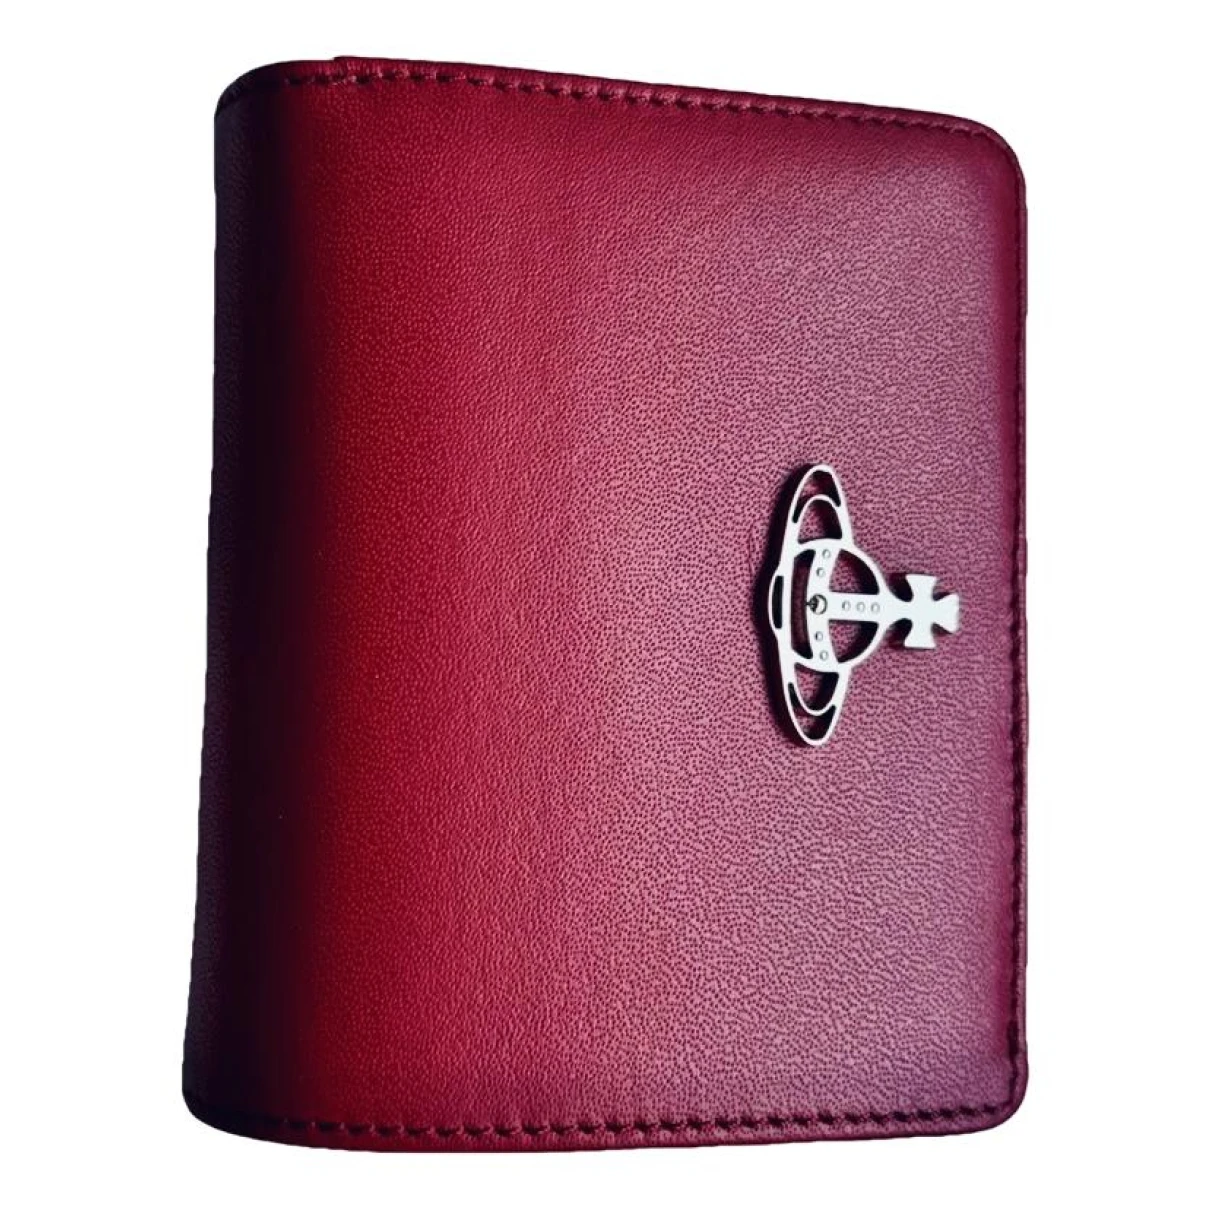 Pre-owned Vivienne Westwood Leather Wallet In Burgundy